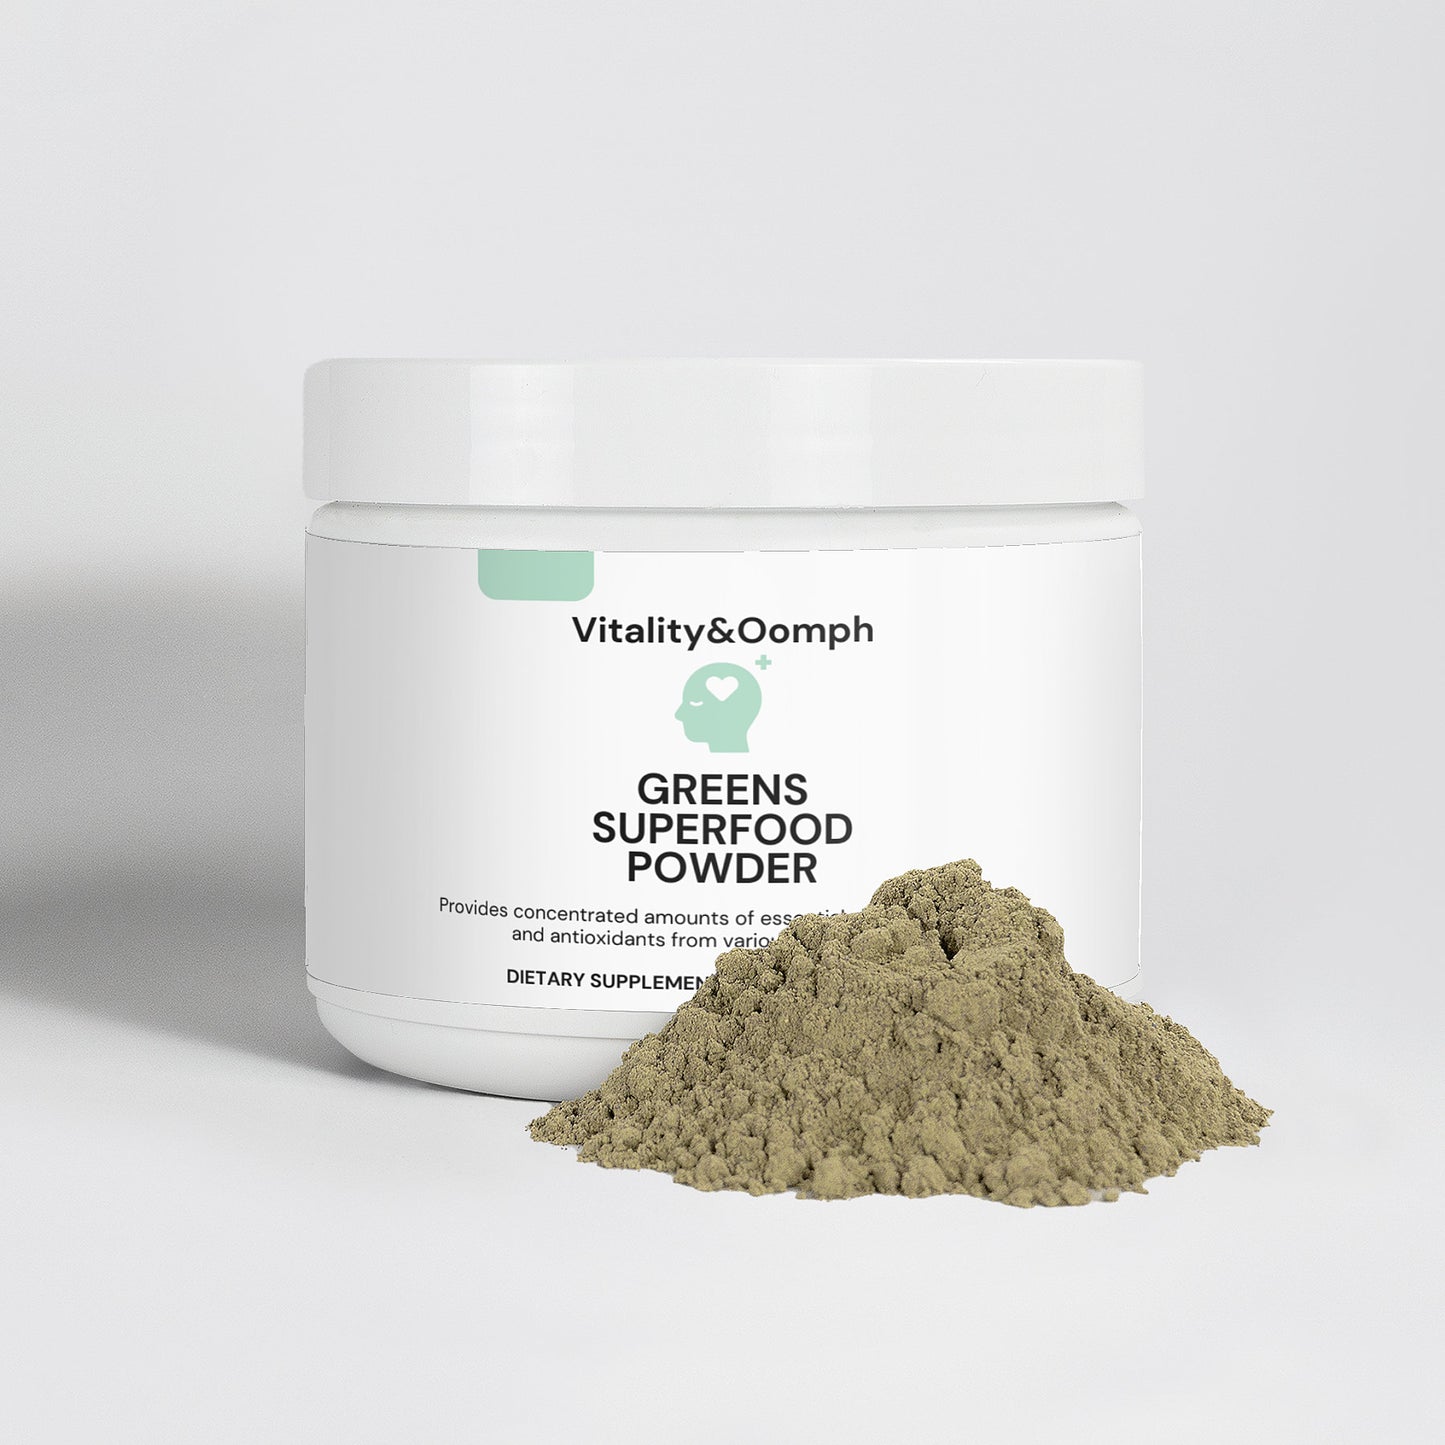 Greens Superfood Powder